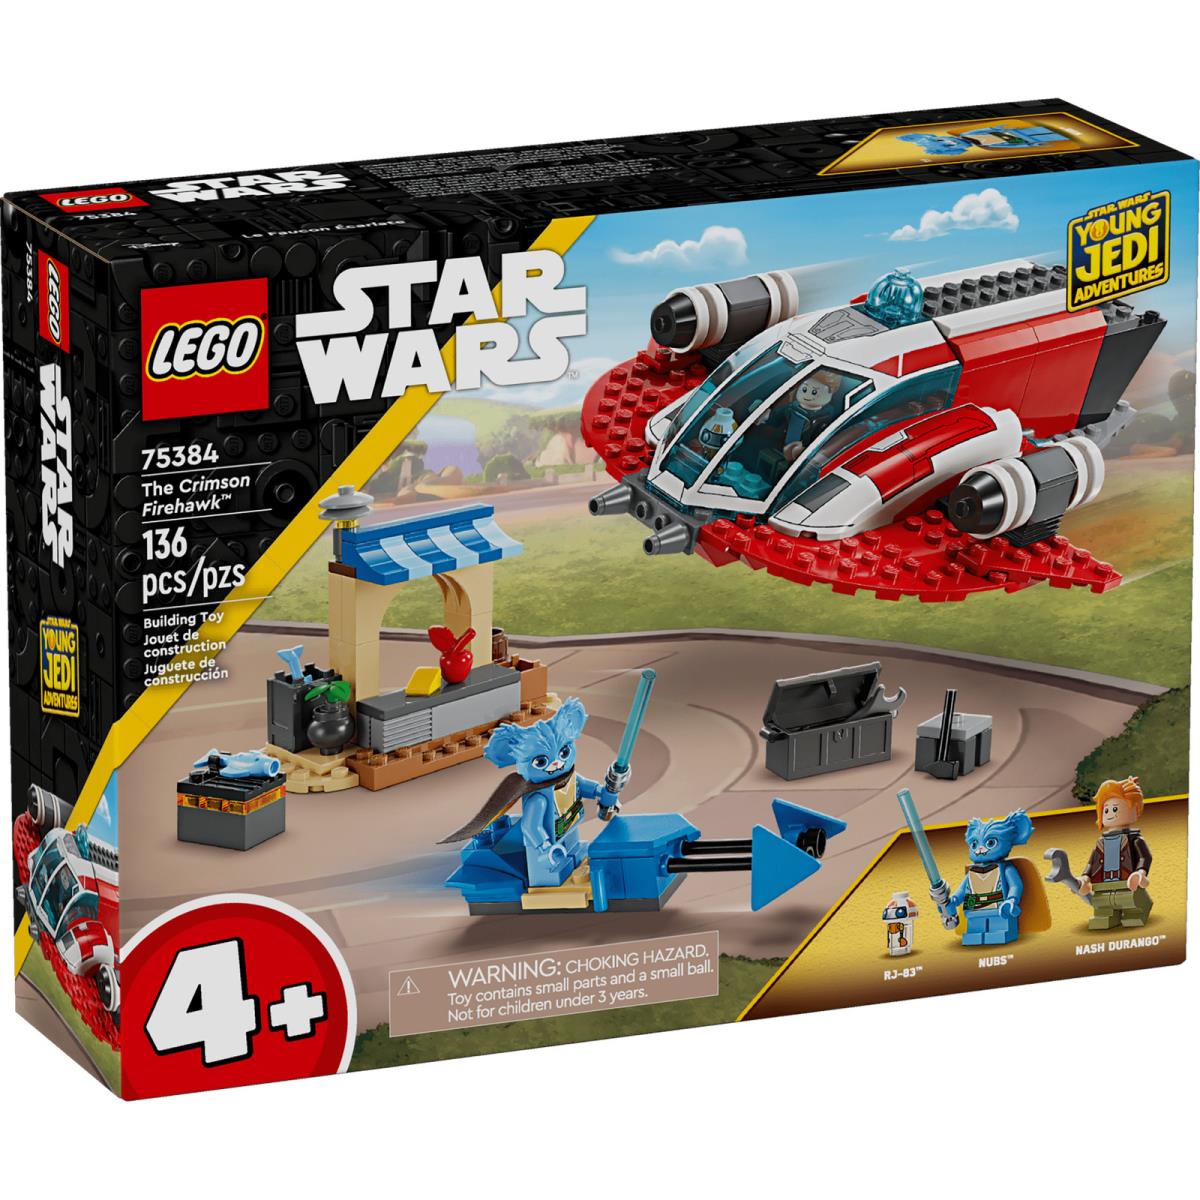 Lego Star Wars Young Jedi Adventures The Crimson Firehawk 75384 Building Toy Set